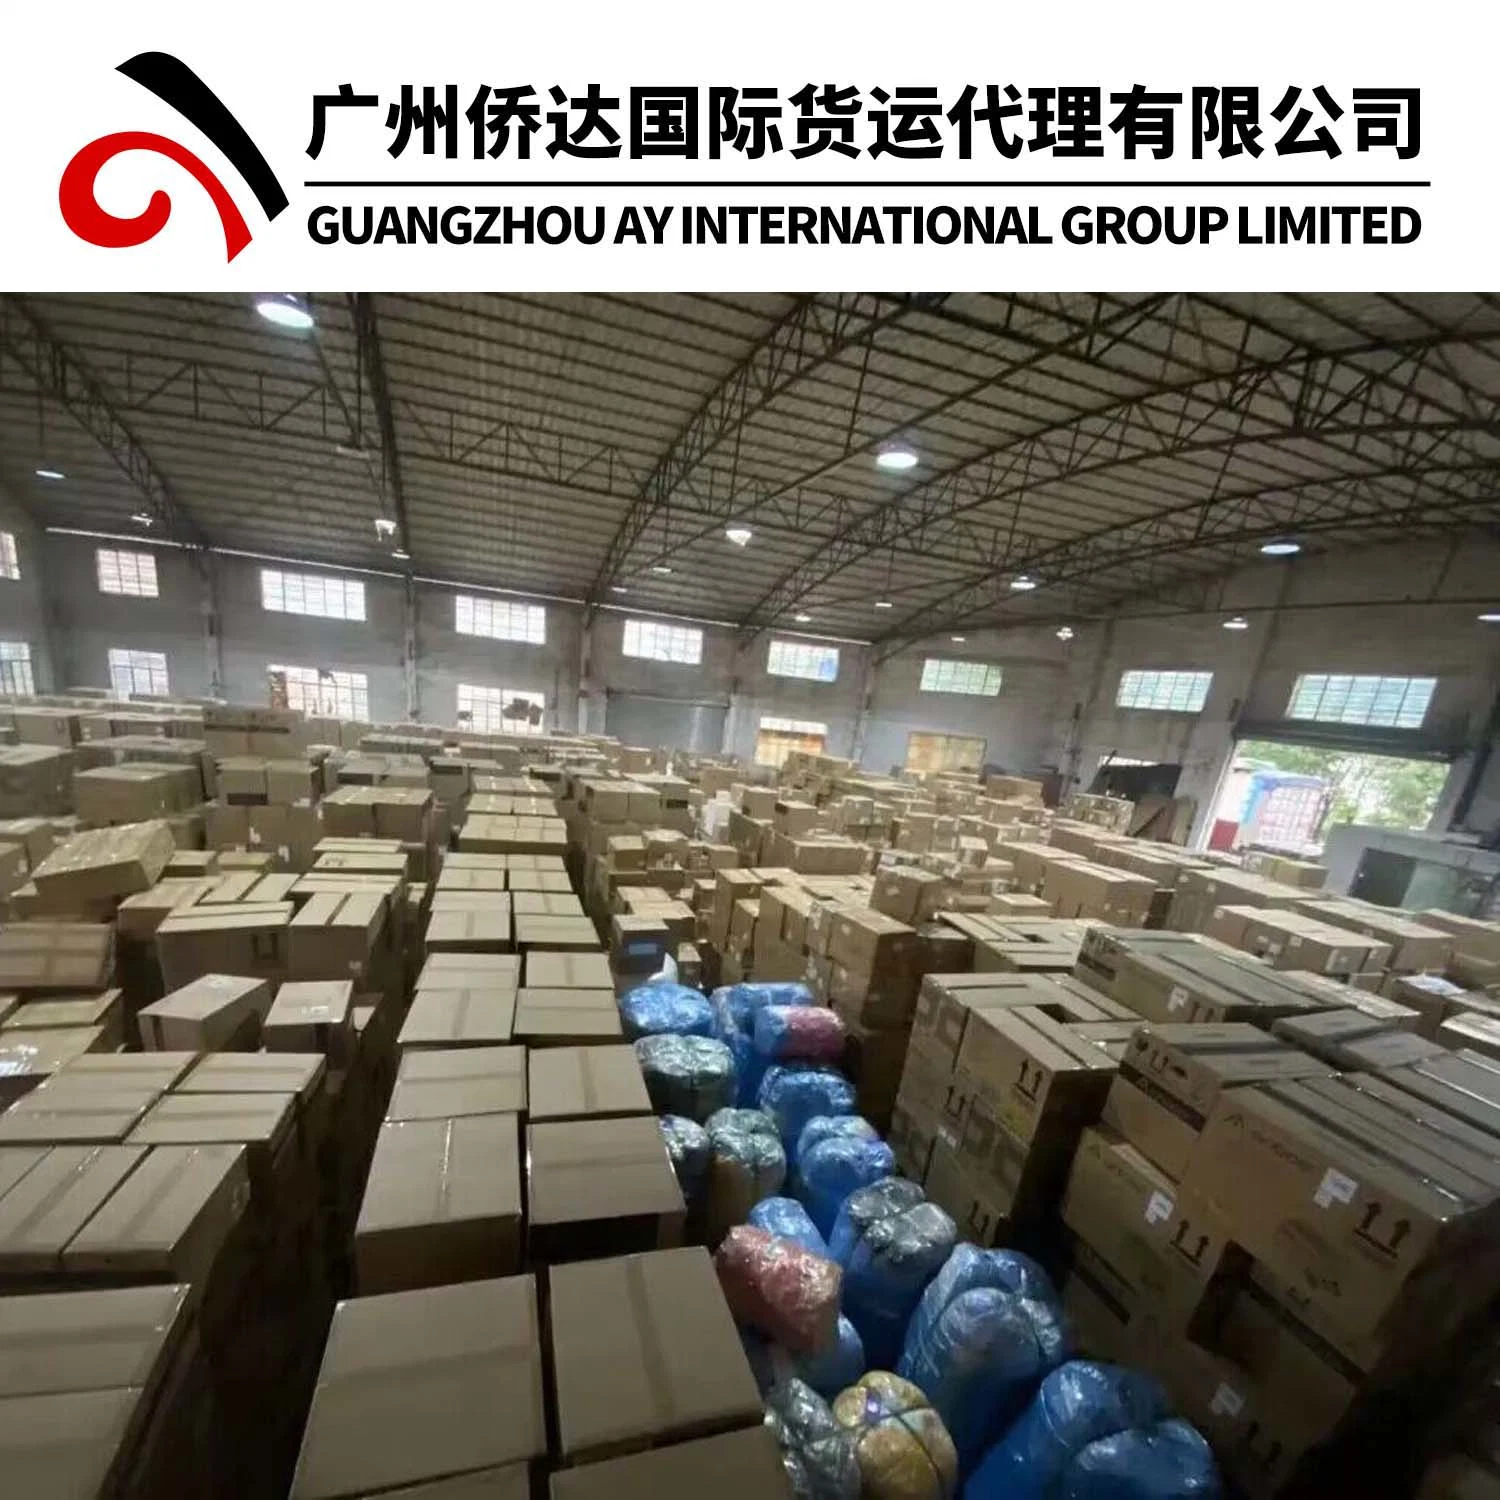 Professional China Customs Broker Service (Export) and China Customs Clearance Service (Import)